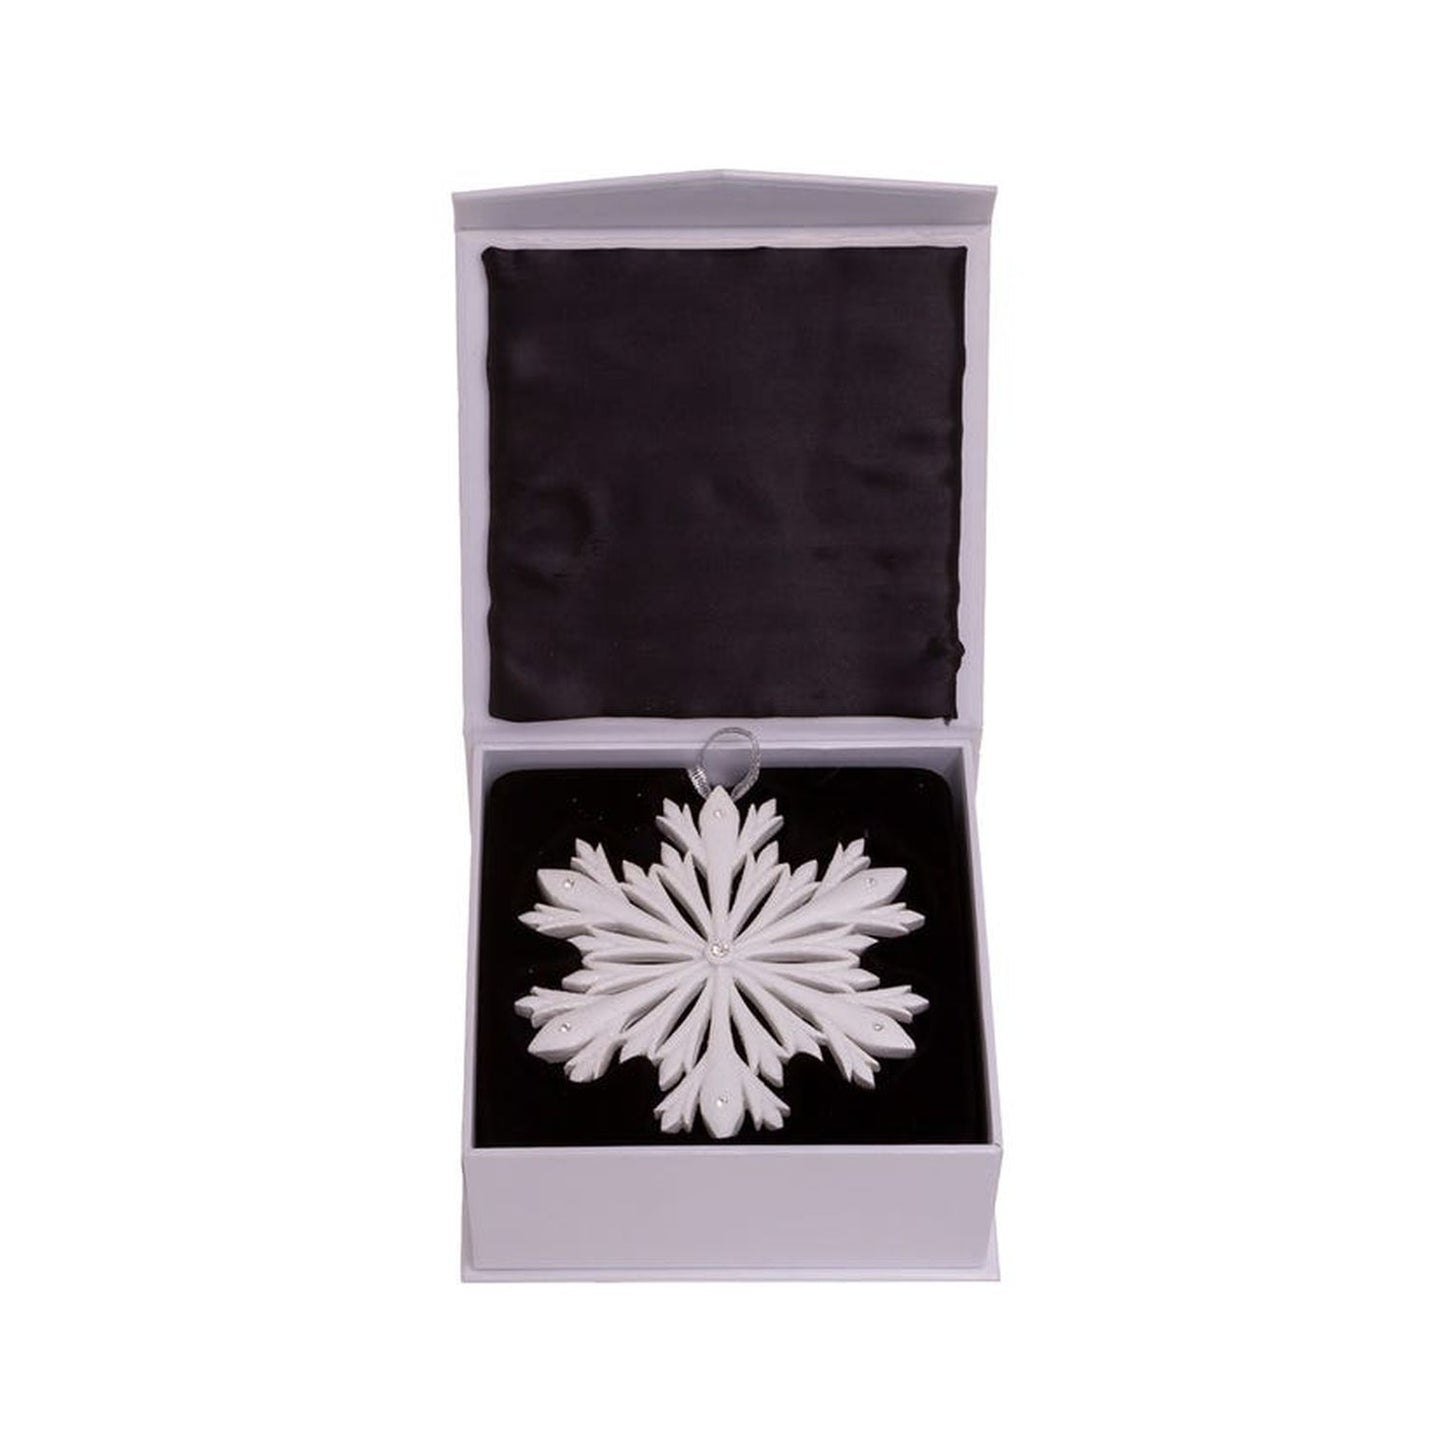 Kurt Adler 4-Inch Elegant Snowflake Ornament With Swarovski Elements